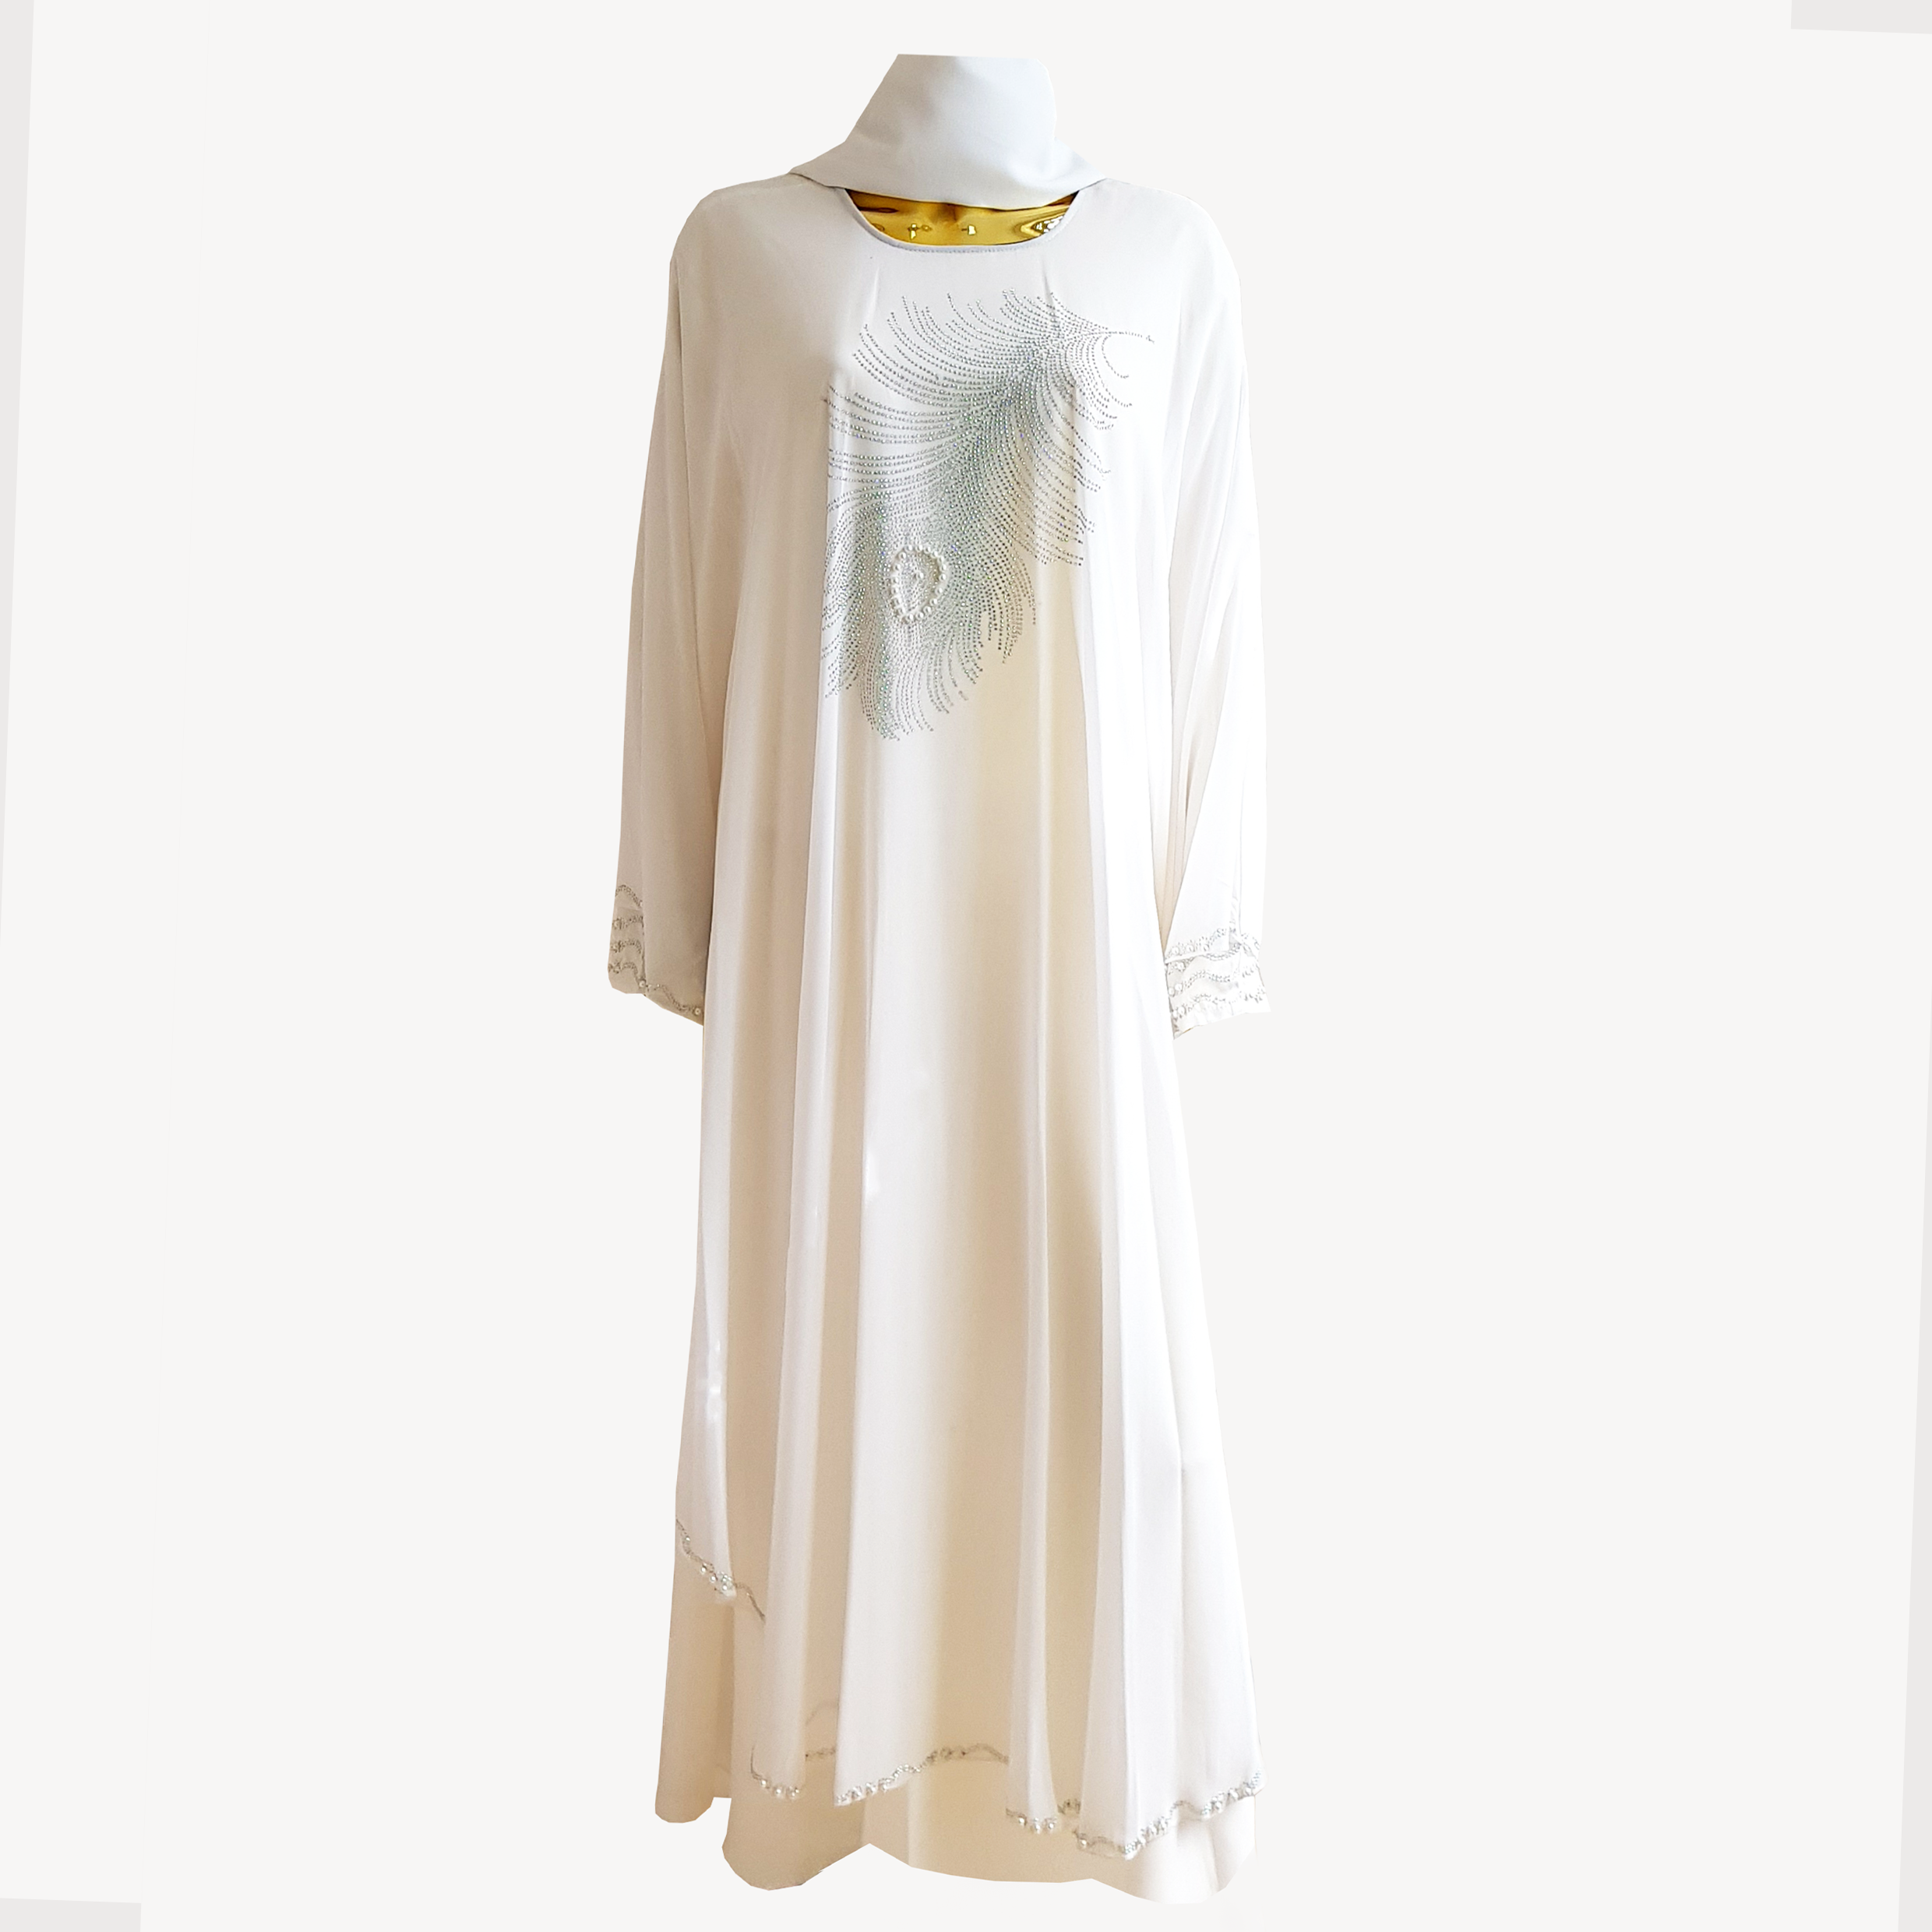 Layered Abaya with Feathered Rhinestone Accents and Hand Embellishments